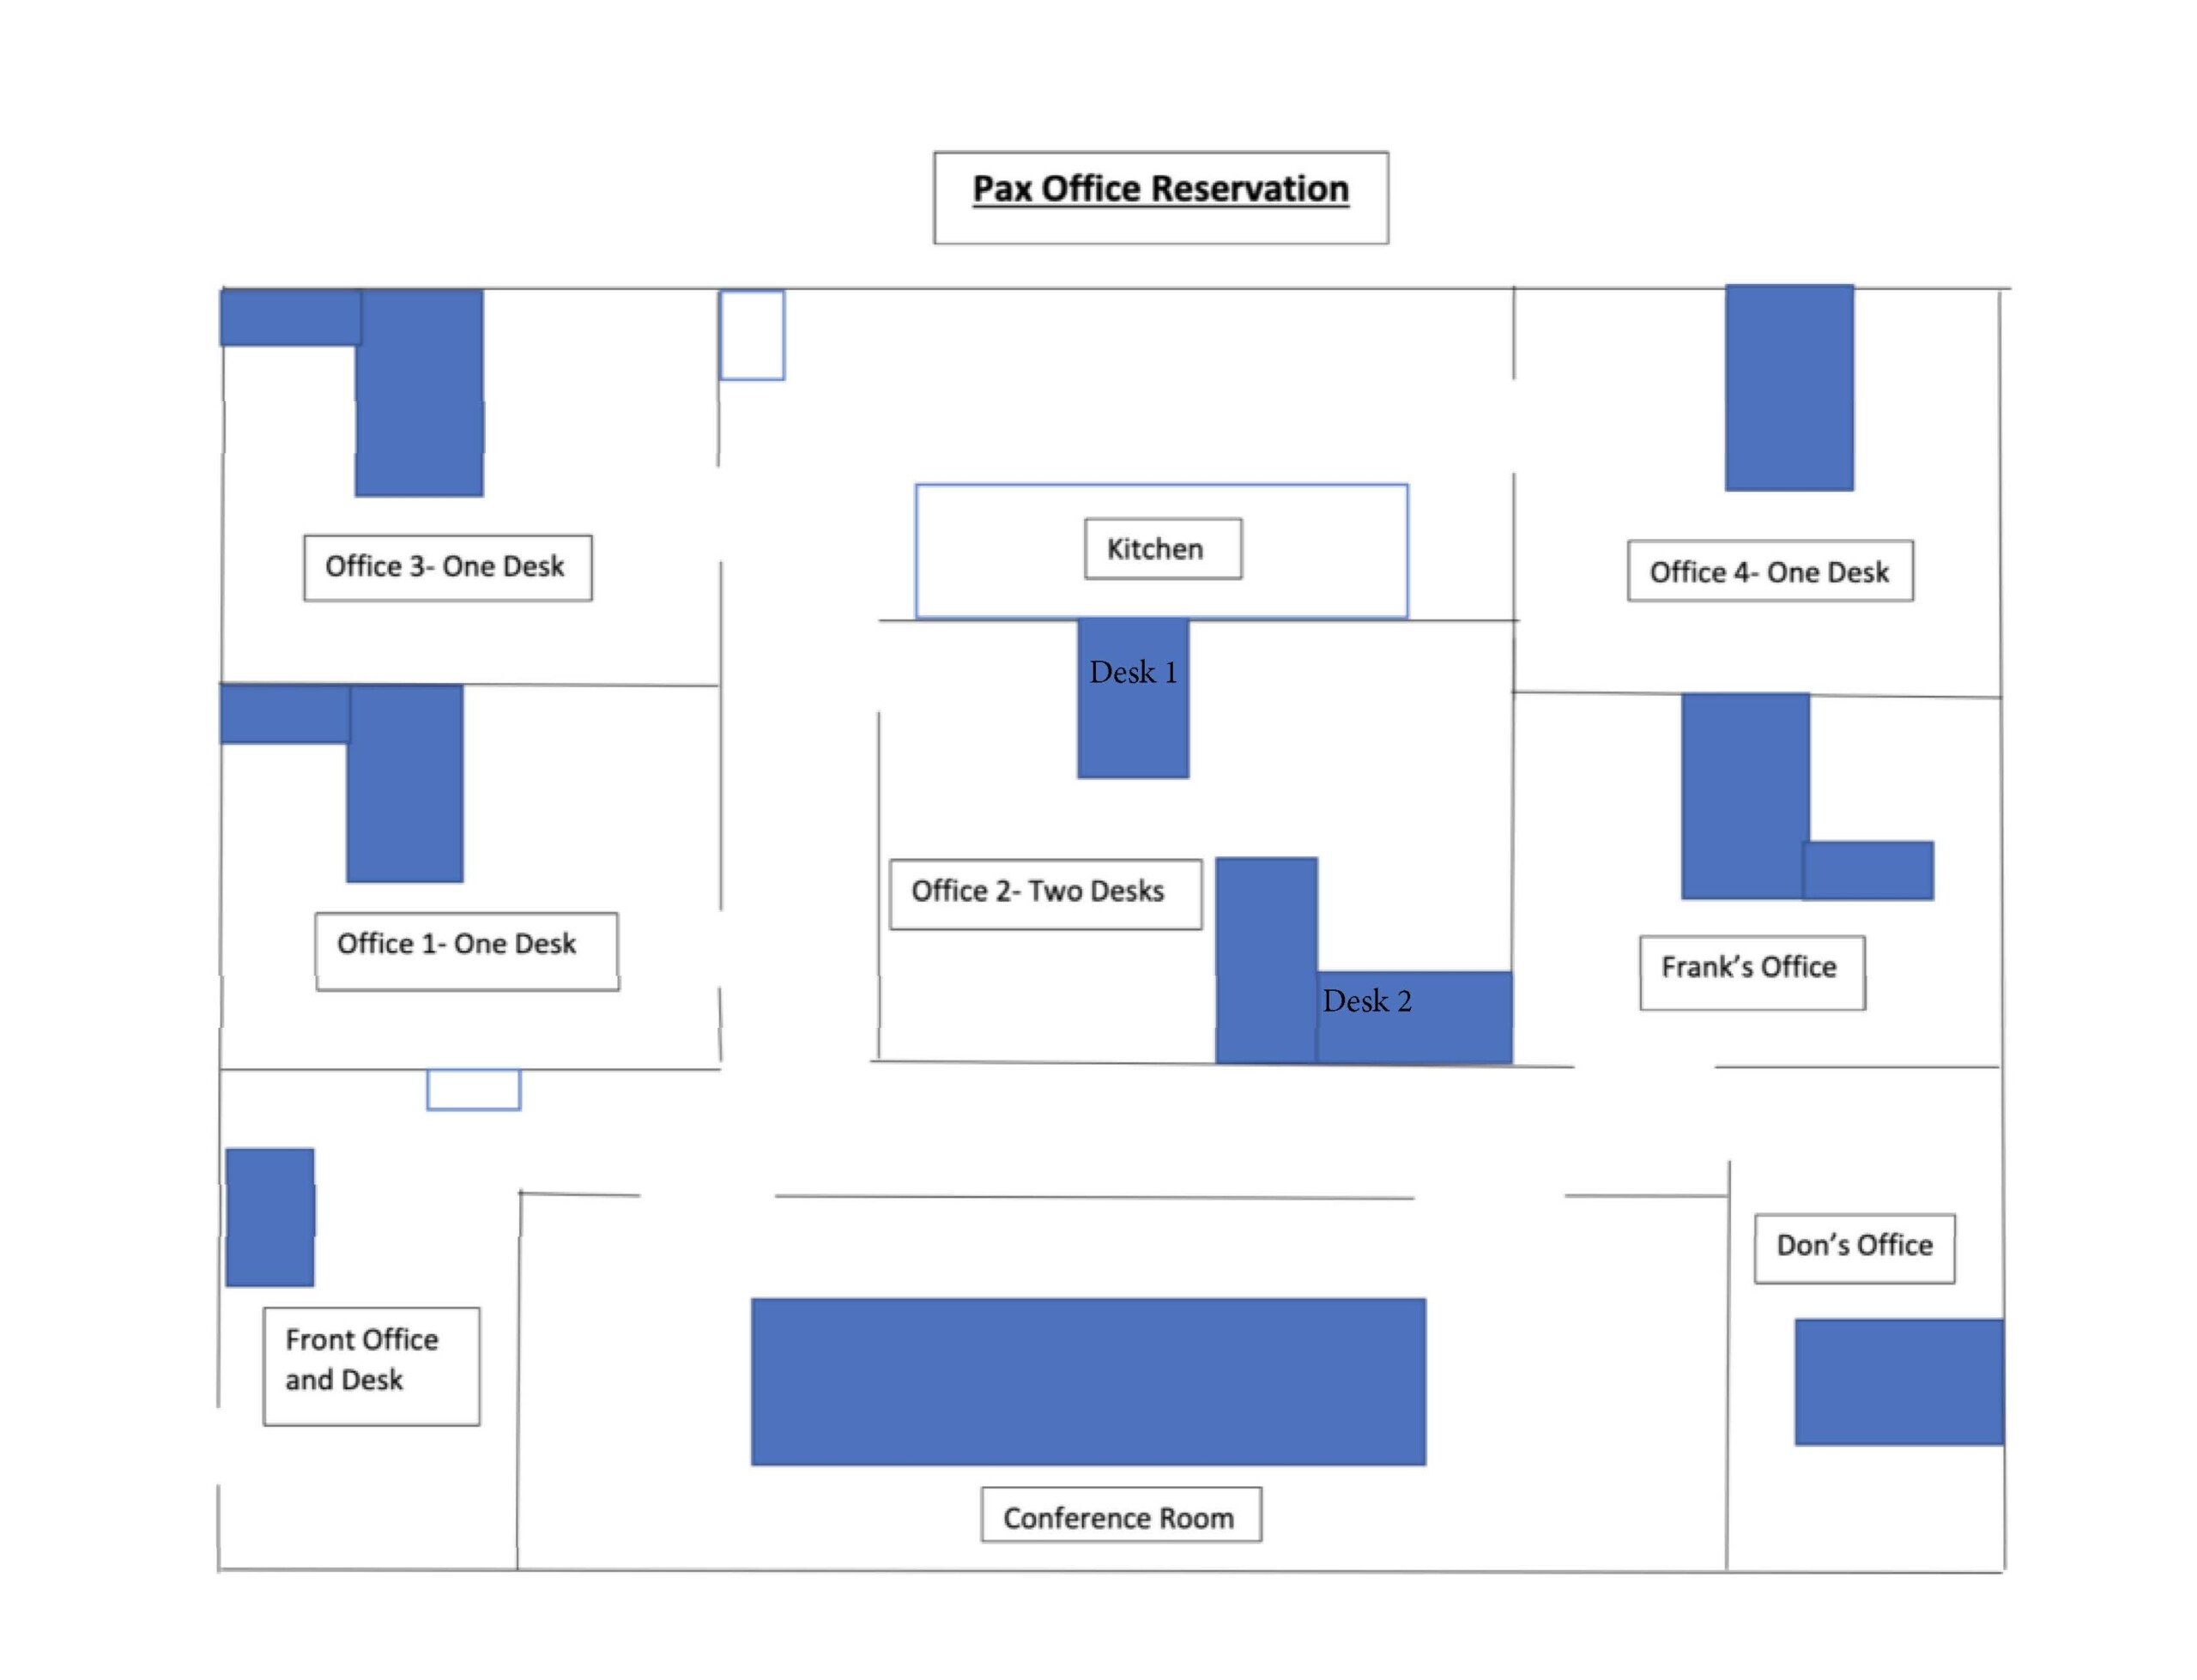 DSE Pax River Office Floor Plan Reservation